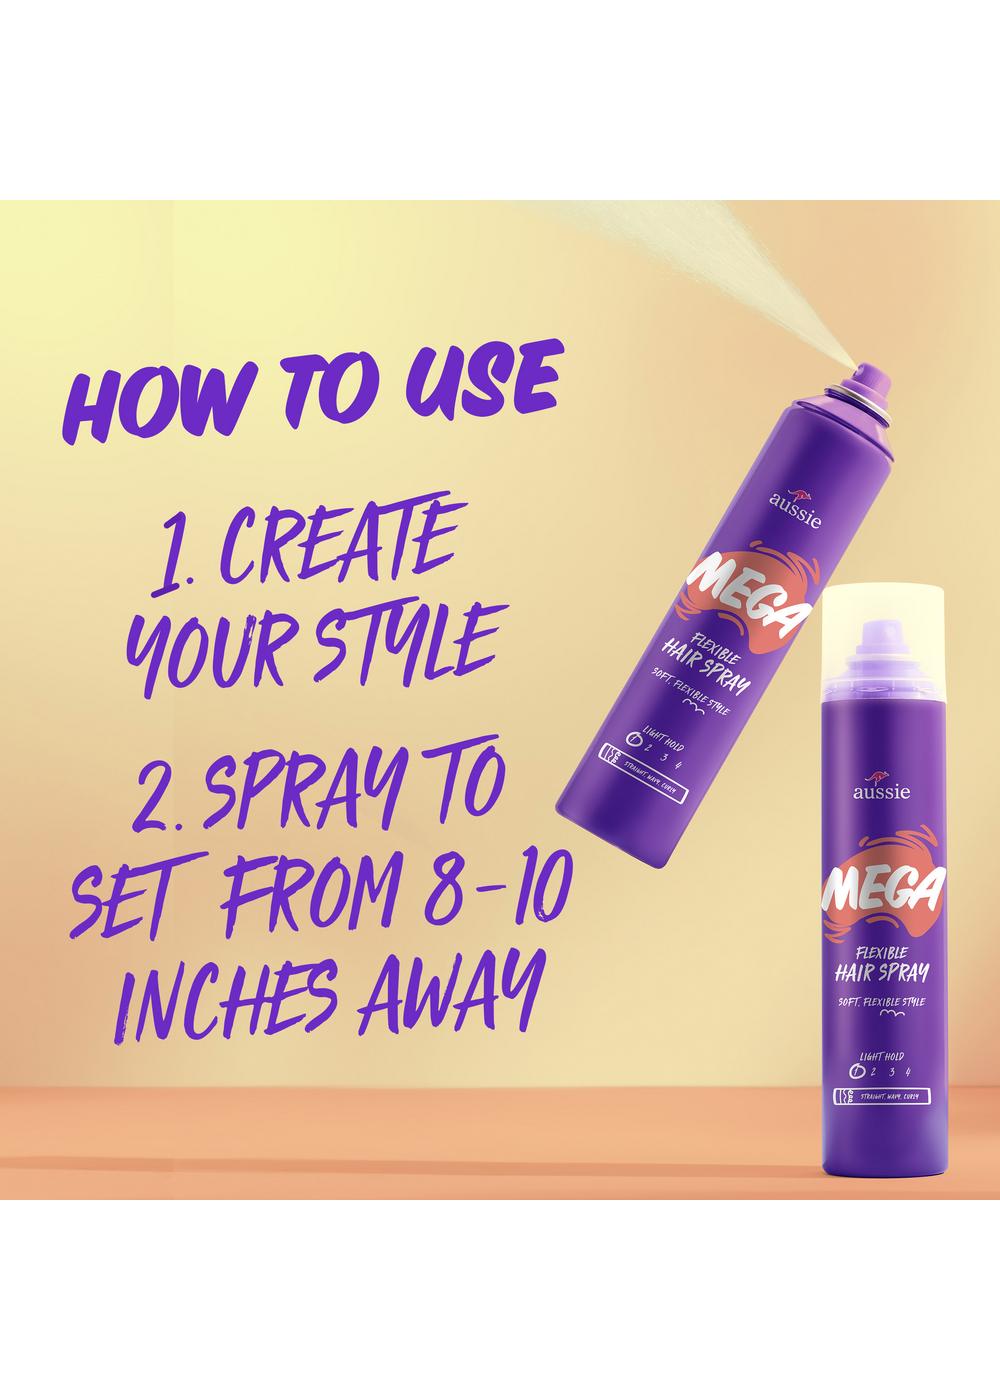 Aussie Mega Flexible Hair Spray; image 9 of 10